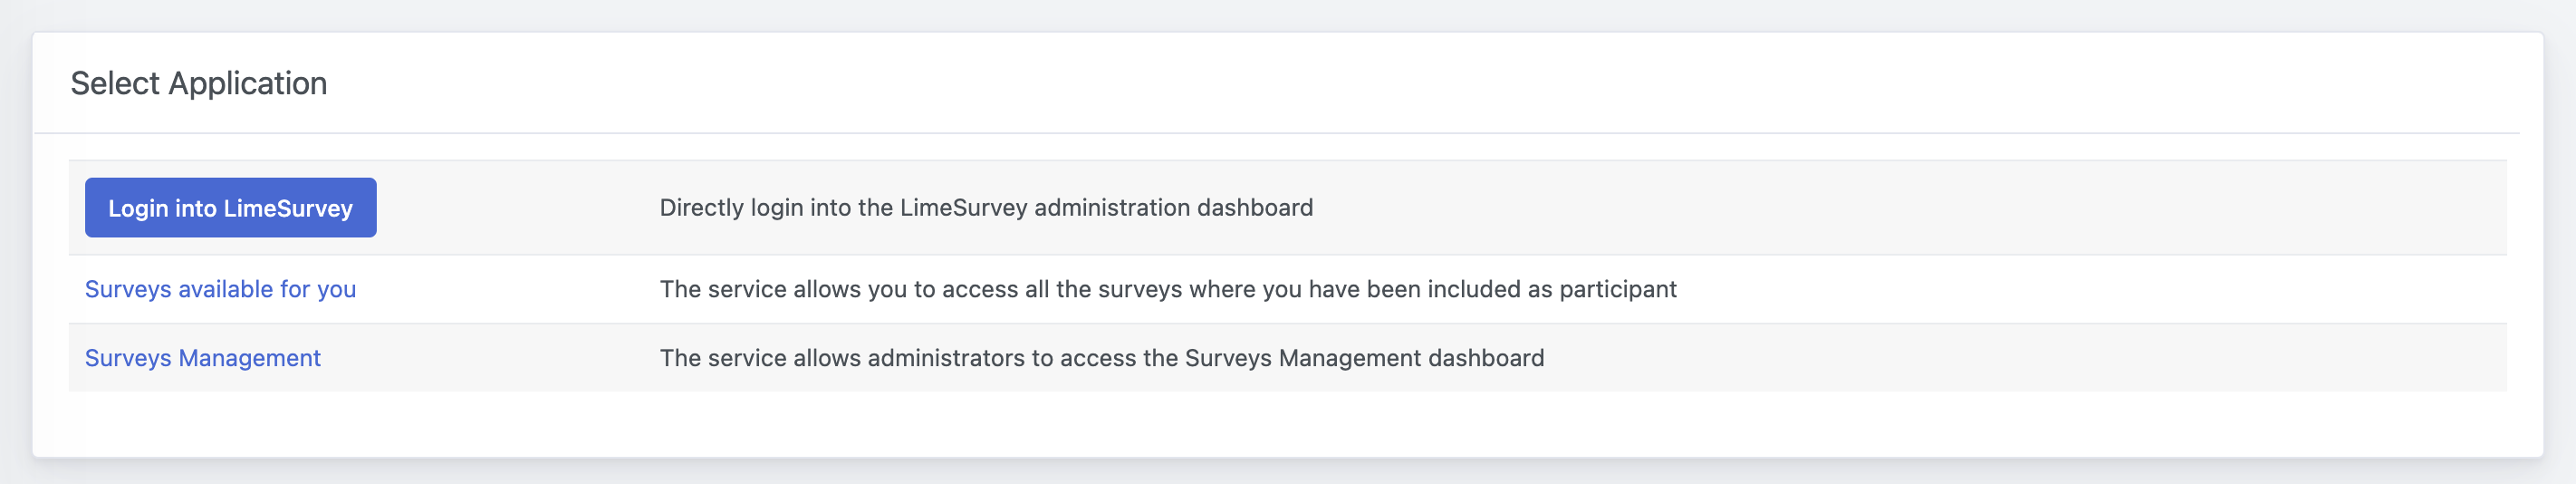 OpenStudio - Surveys - Select Application